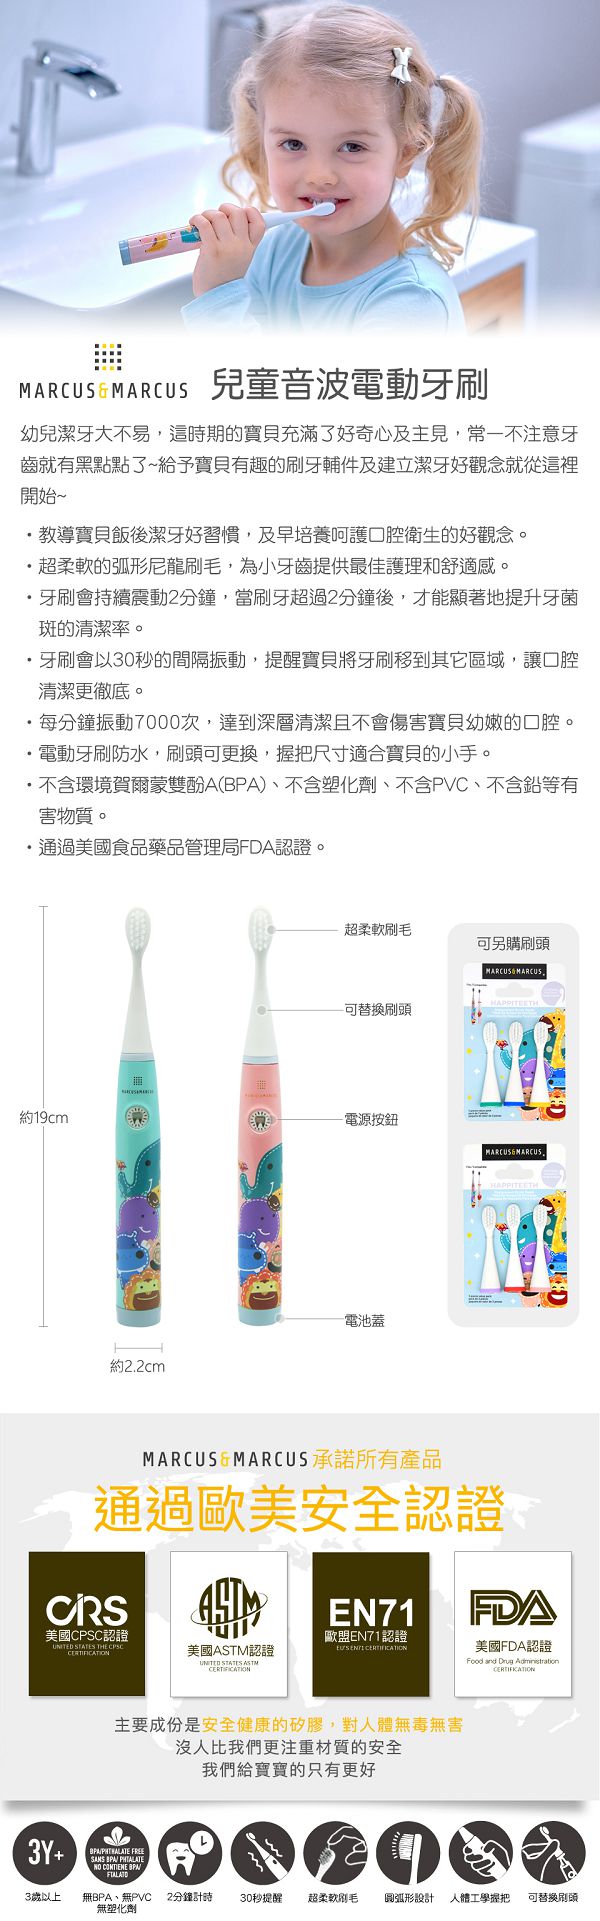 marcus and marcus kids sonic electronic toothbrush 儿童音波电动牙刷